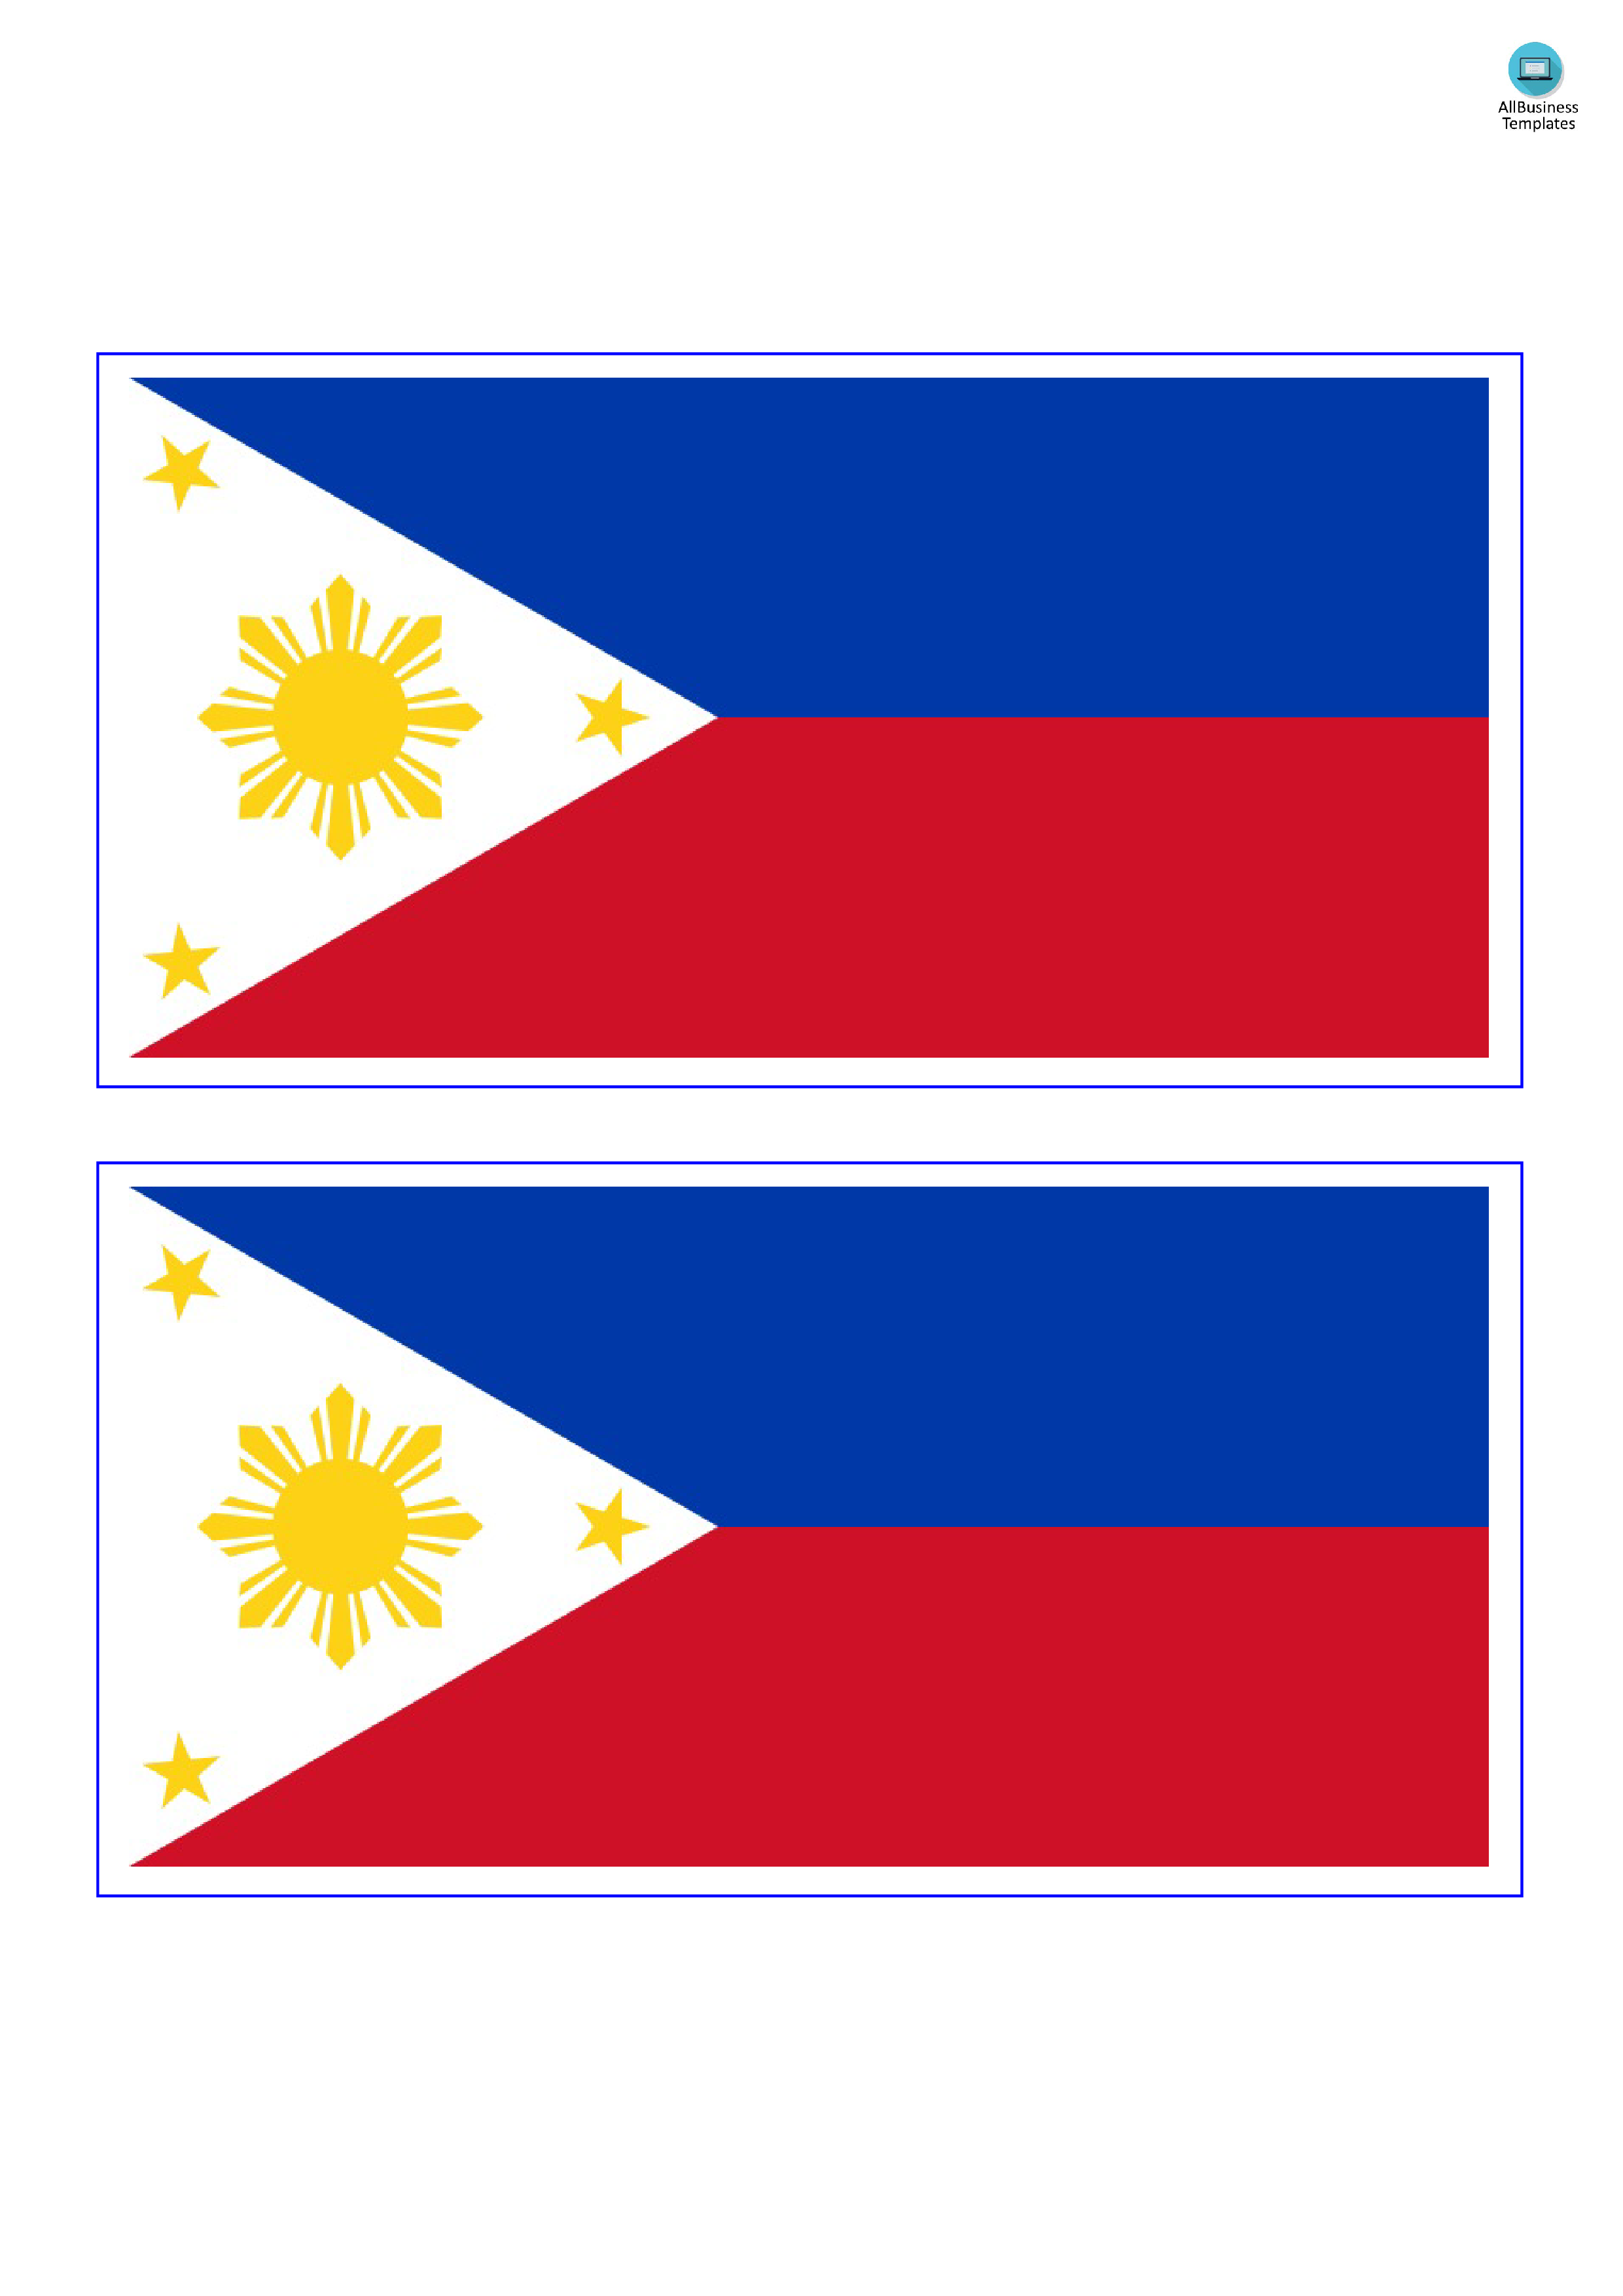 Philippines Flag main image